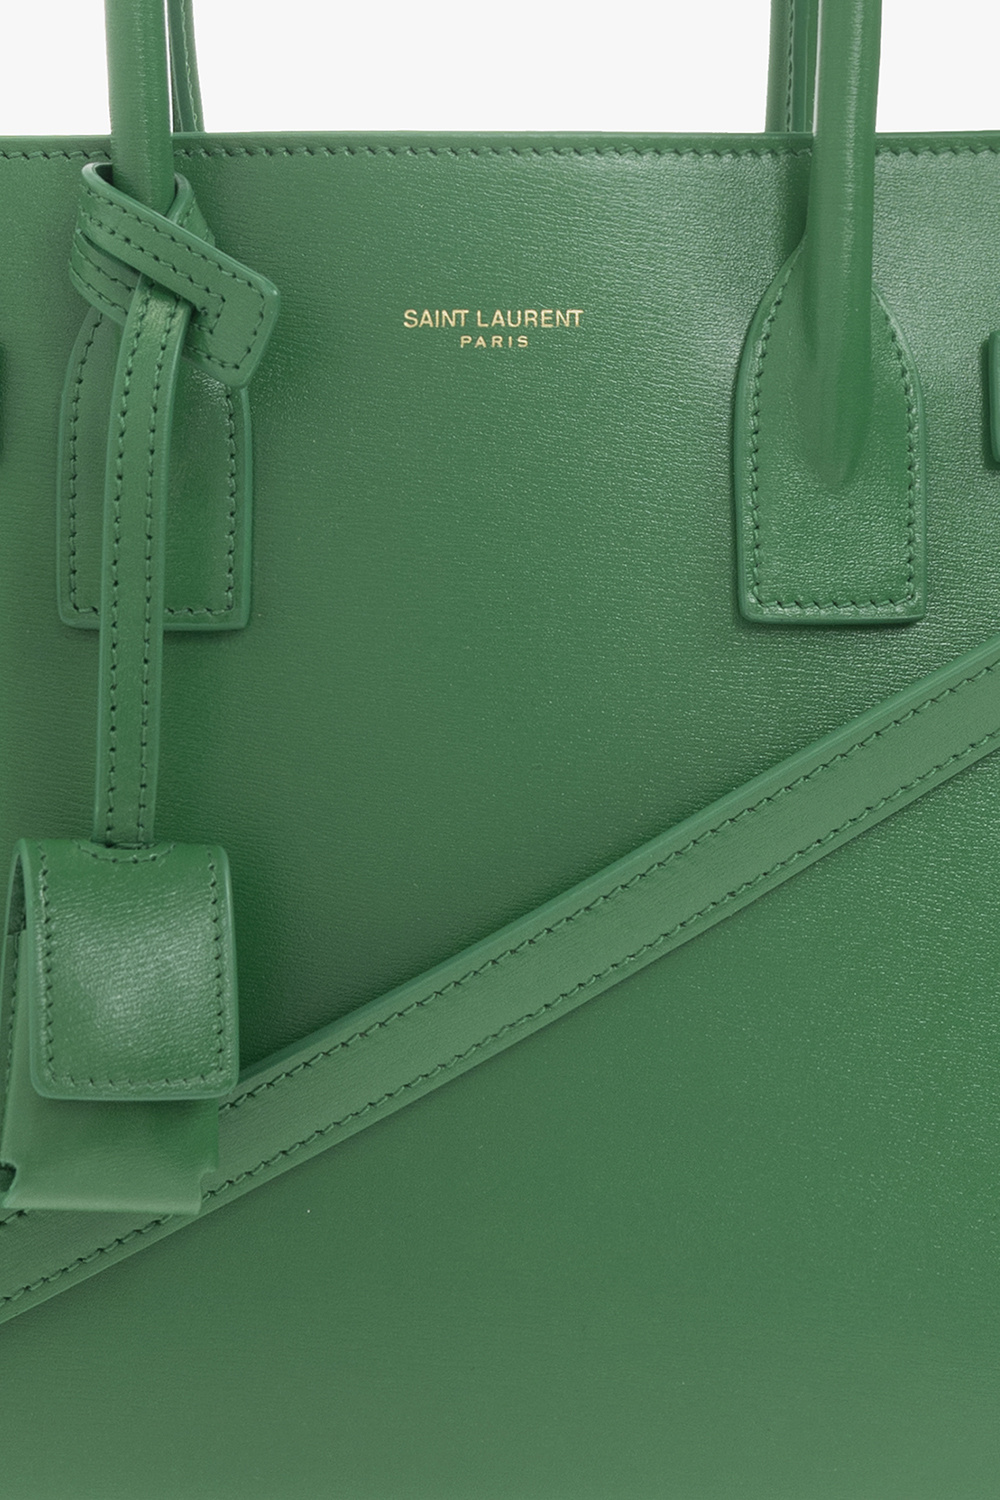 Green Sac de Jour Baby leather handbag, Saint Laurent